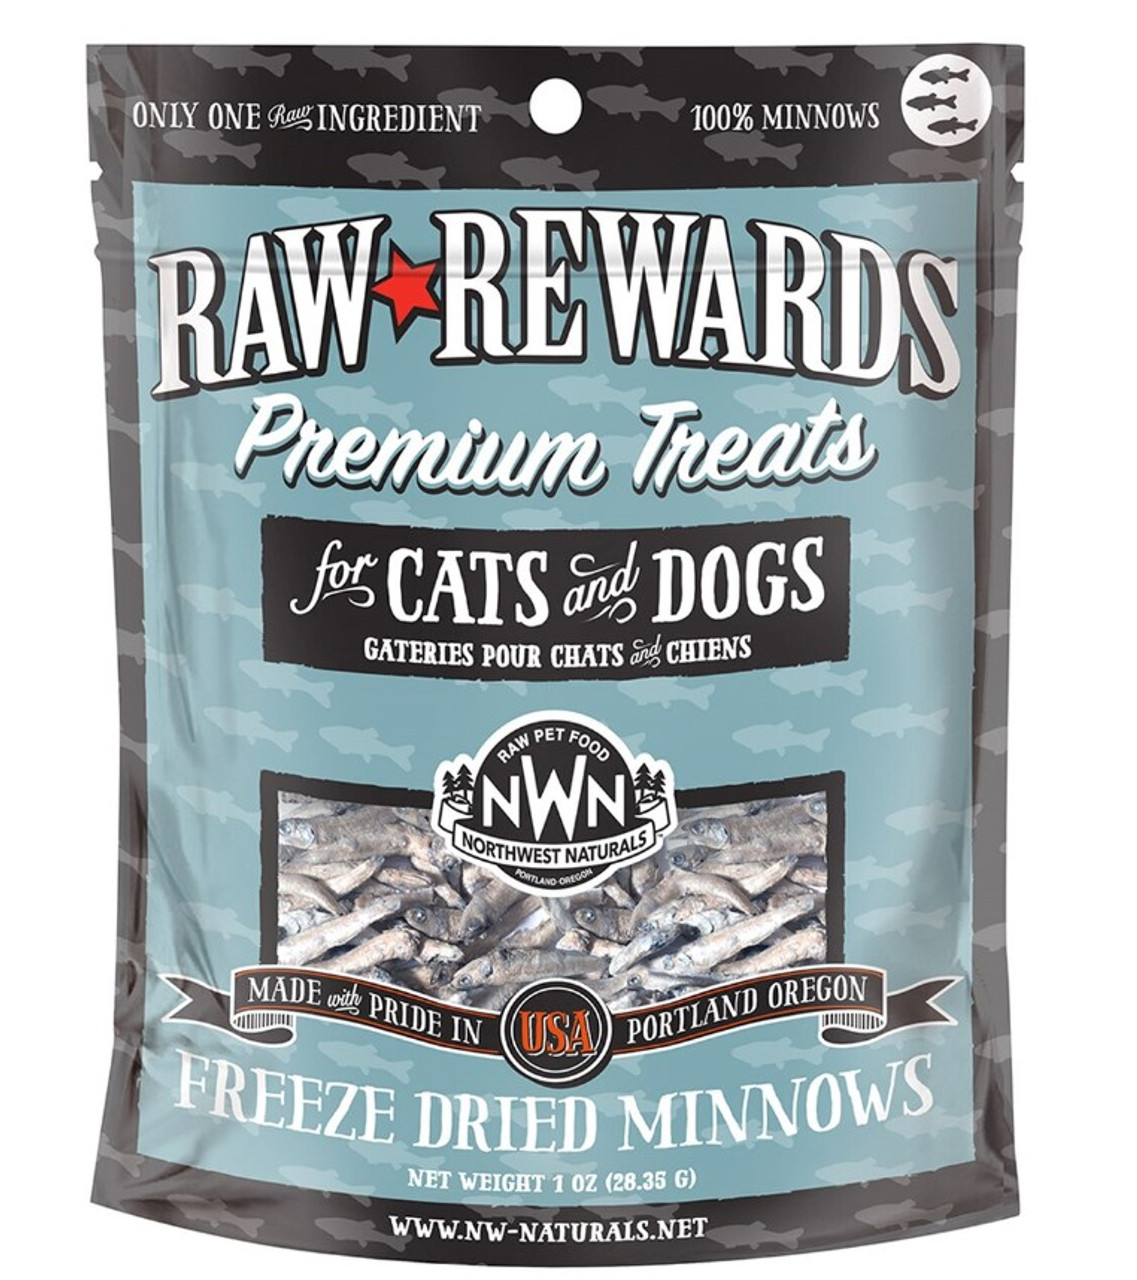 Dried Minnows - Mellow premium